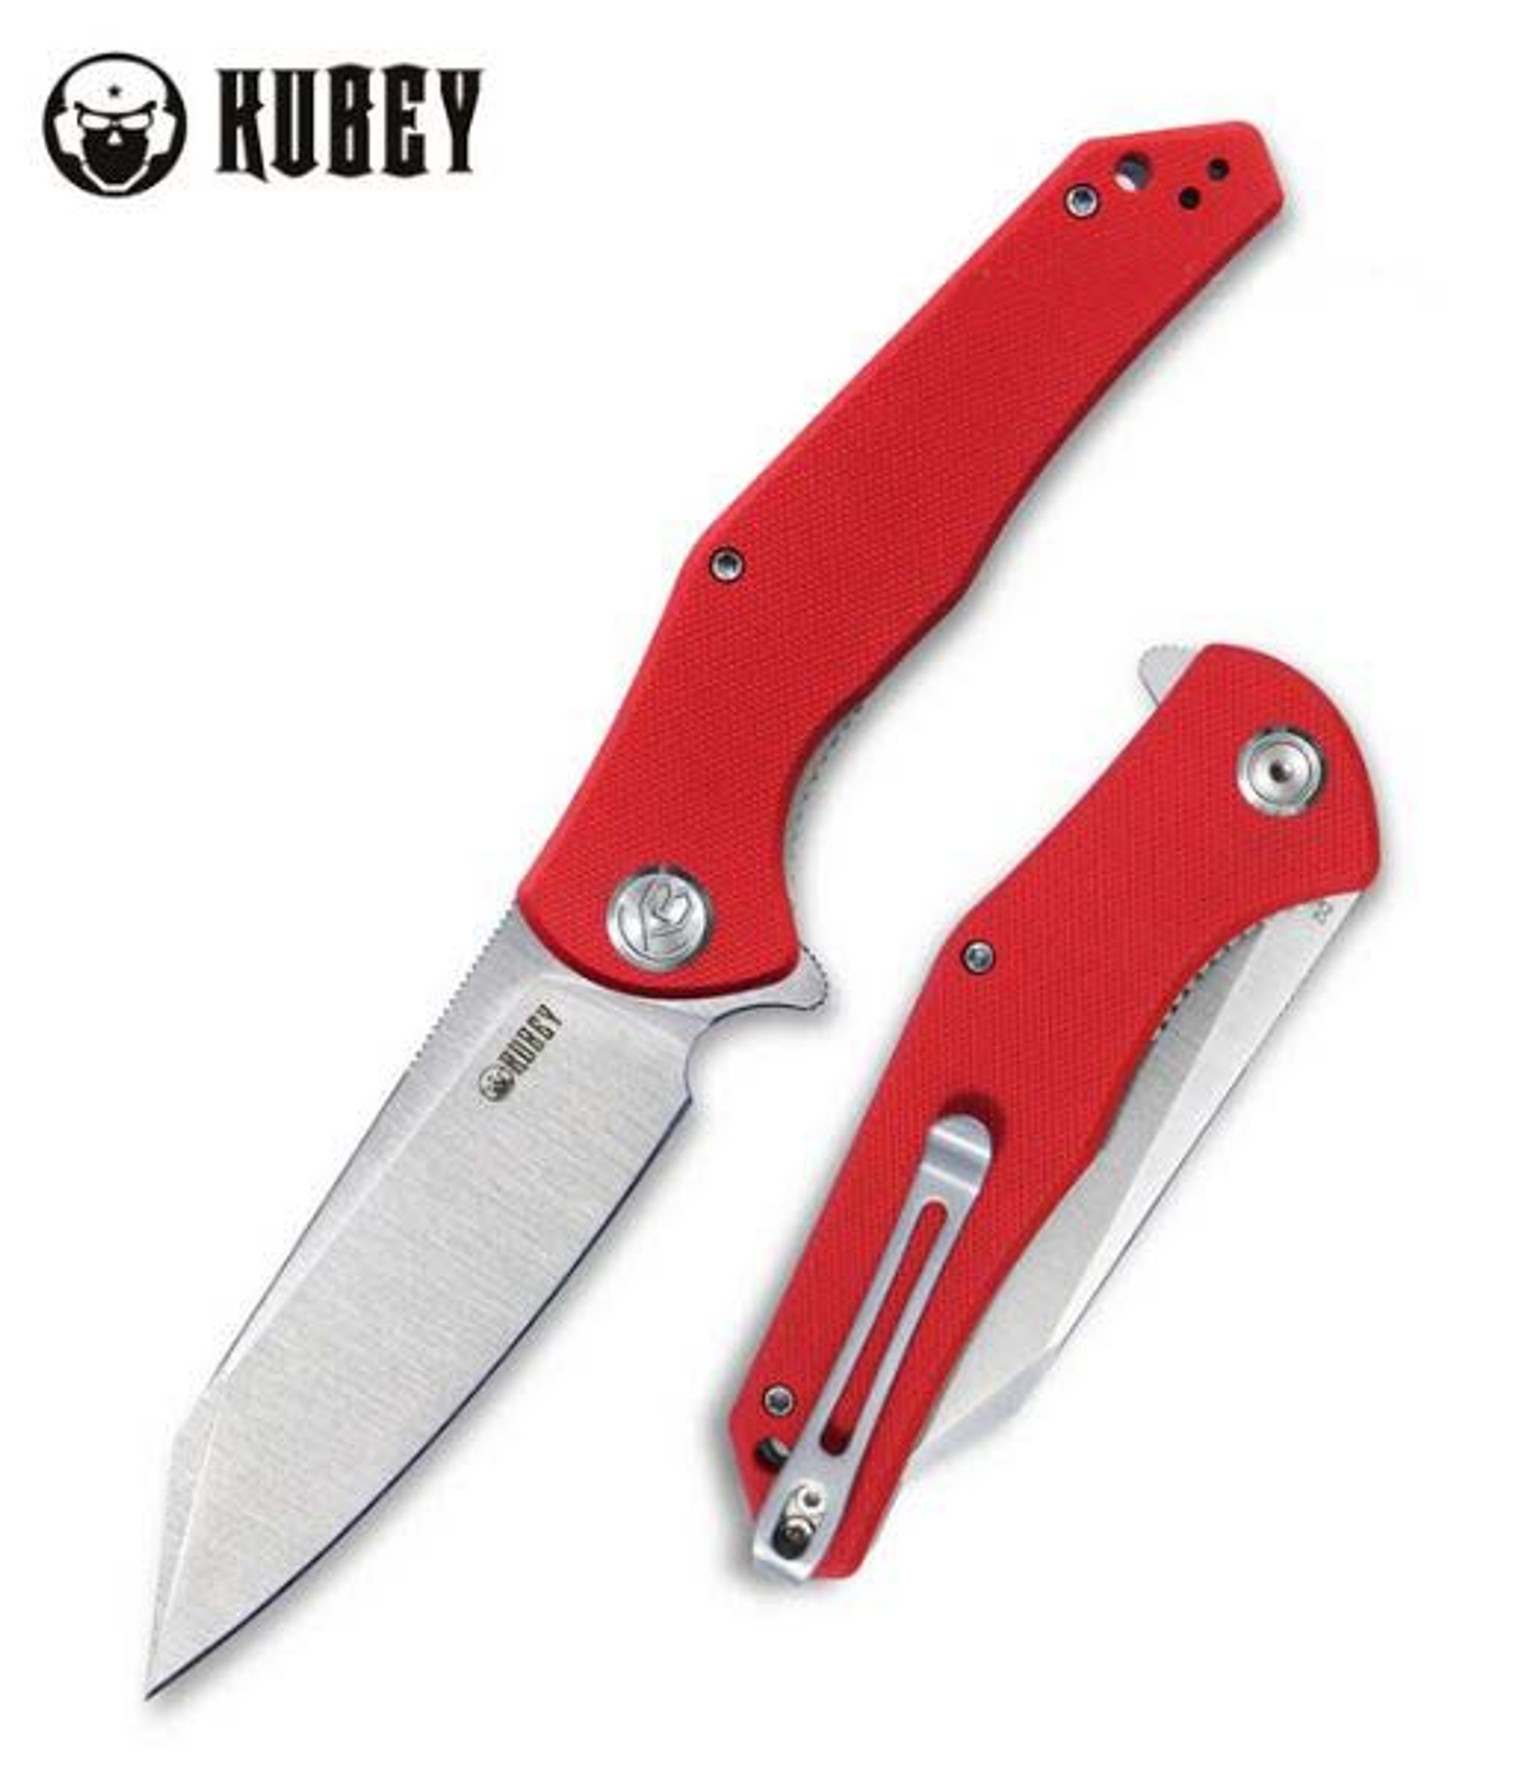 Kubey Flash Flipper Folding Knife, D2 Satin, G10 Red, KU158D